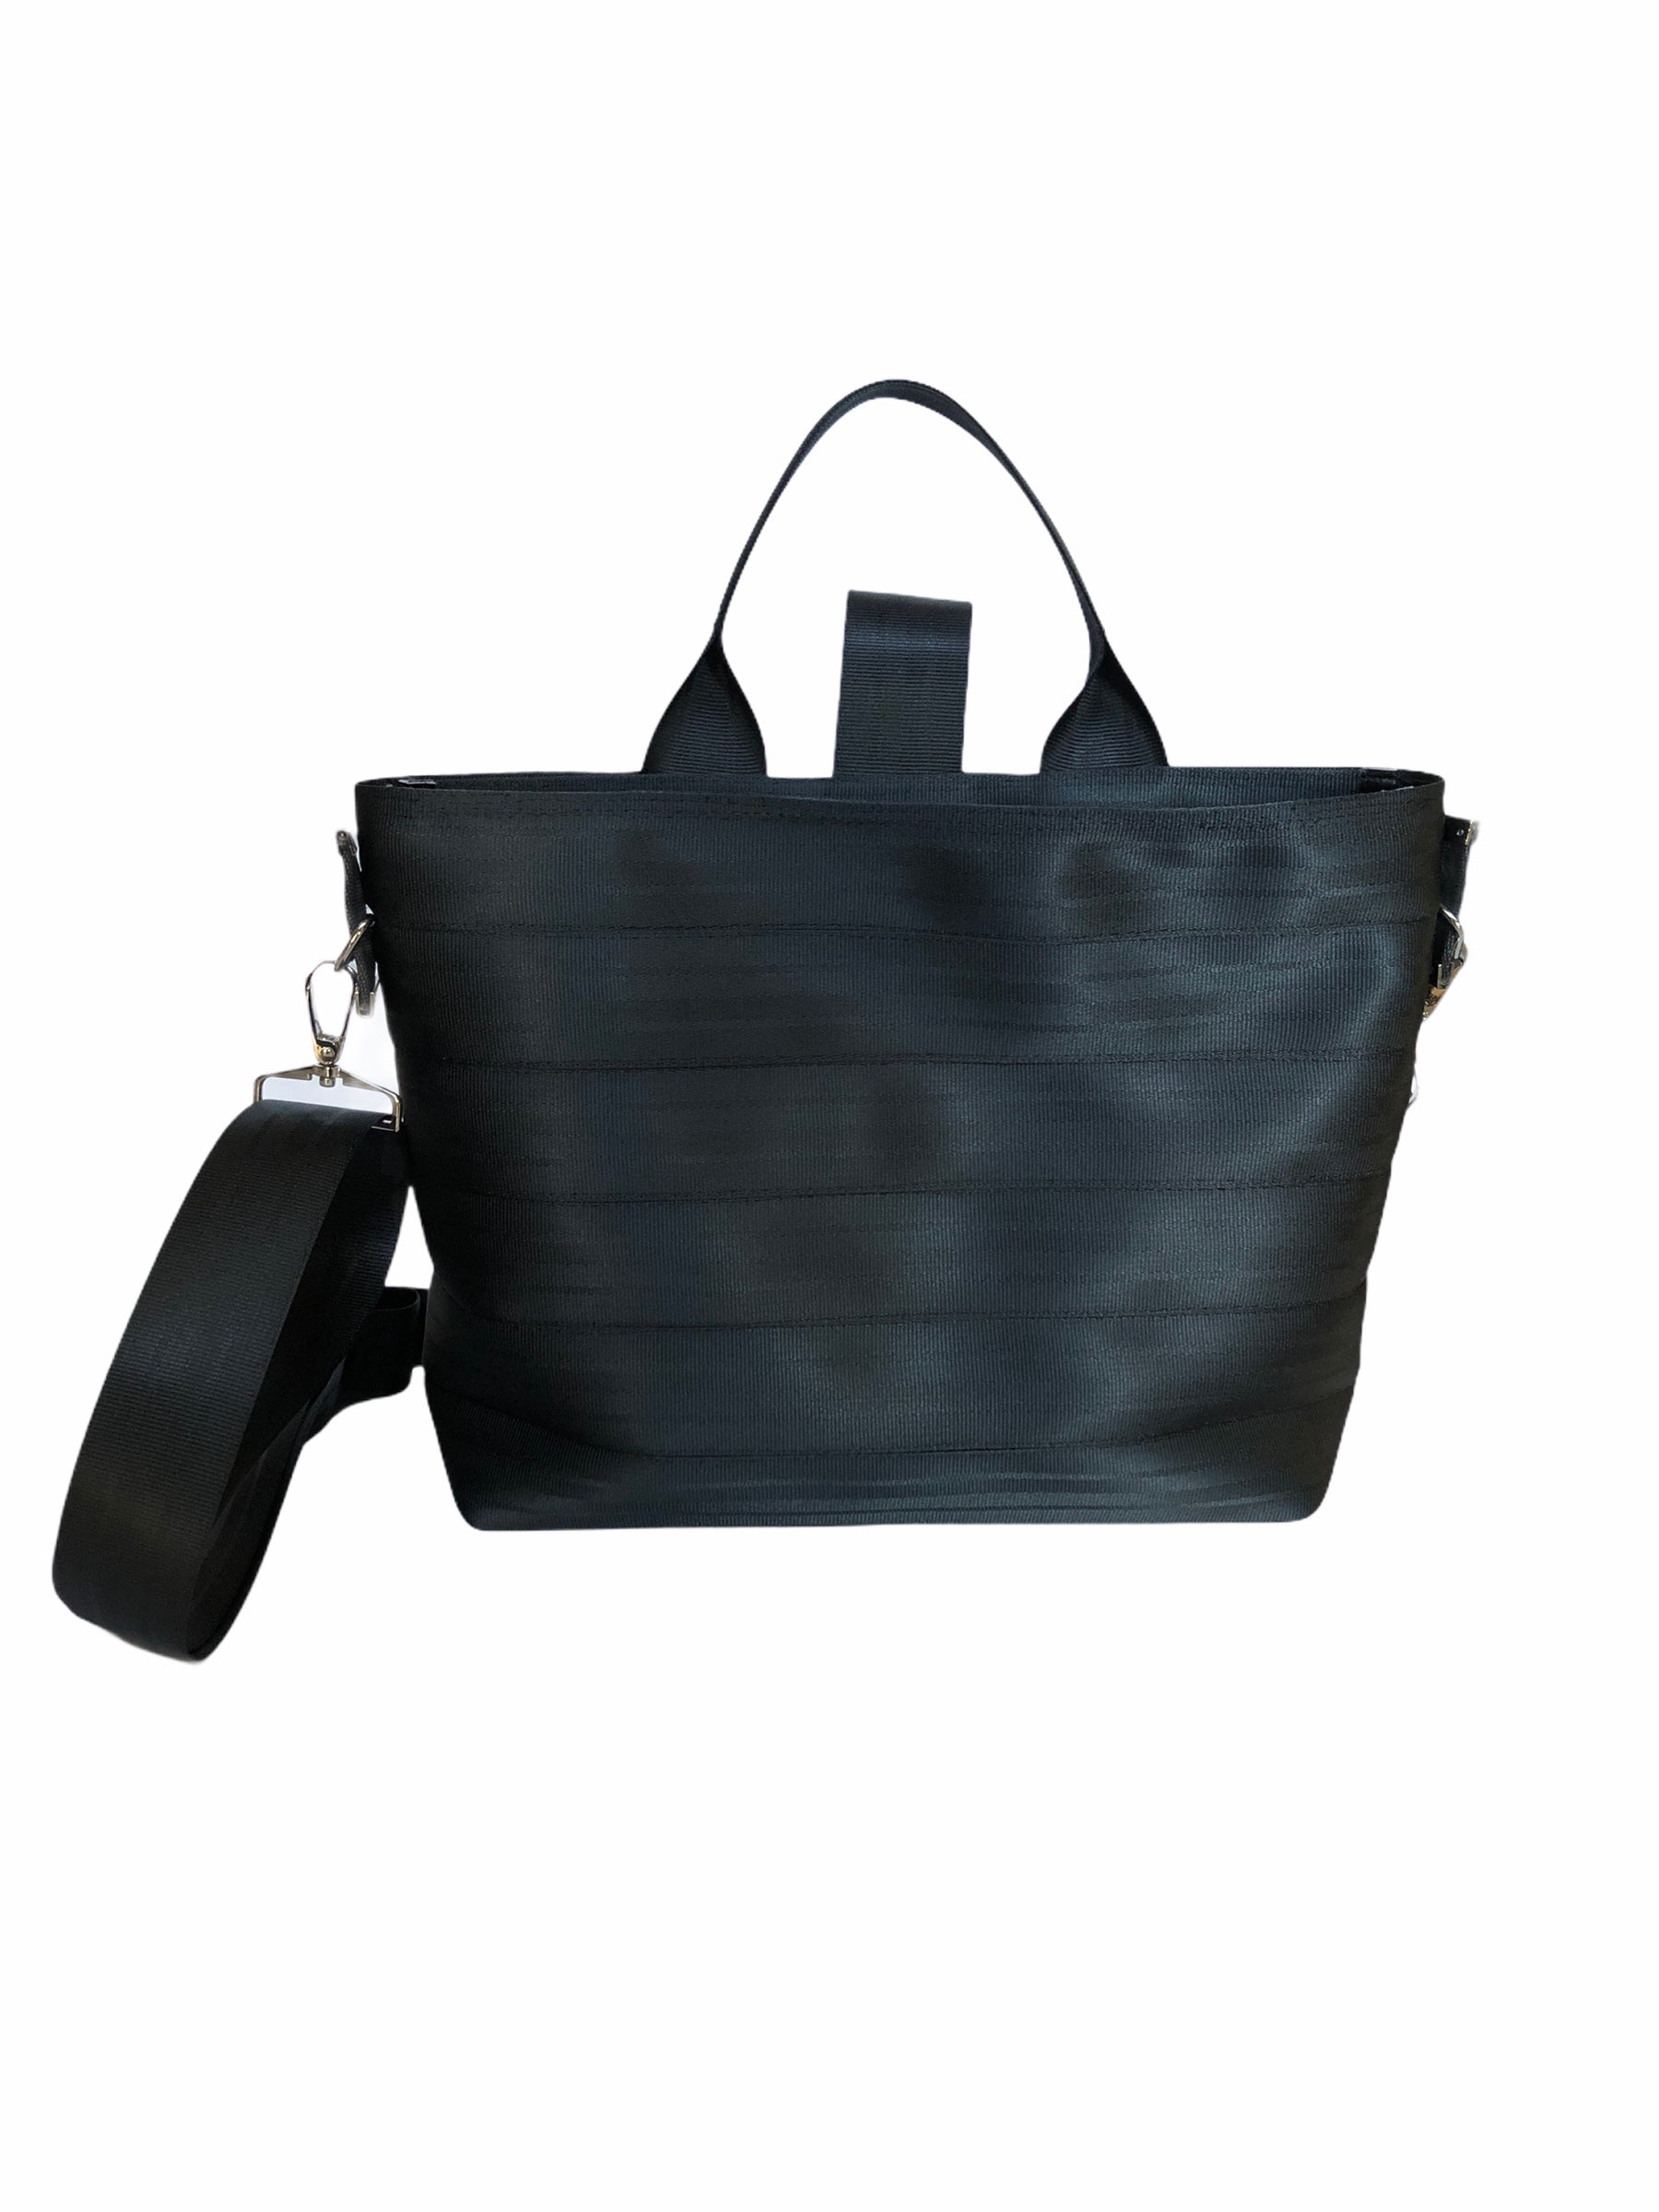 Harveys | Bags | Harveys Recycled Seatbelt Bag | Poshmark